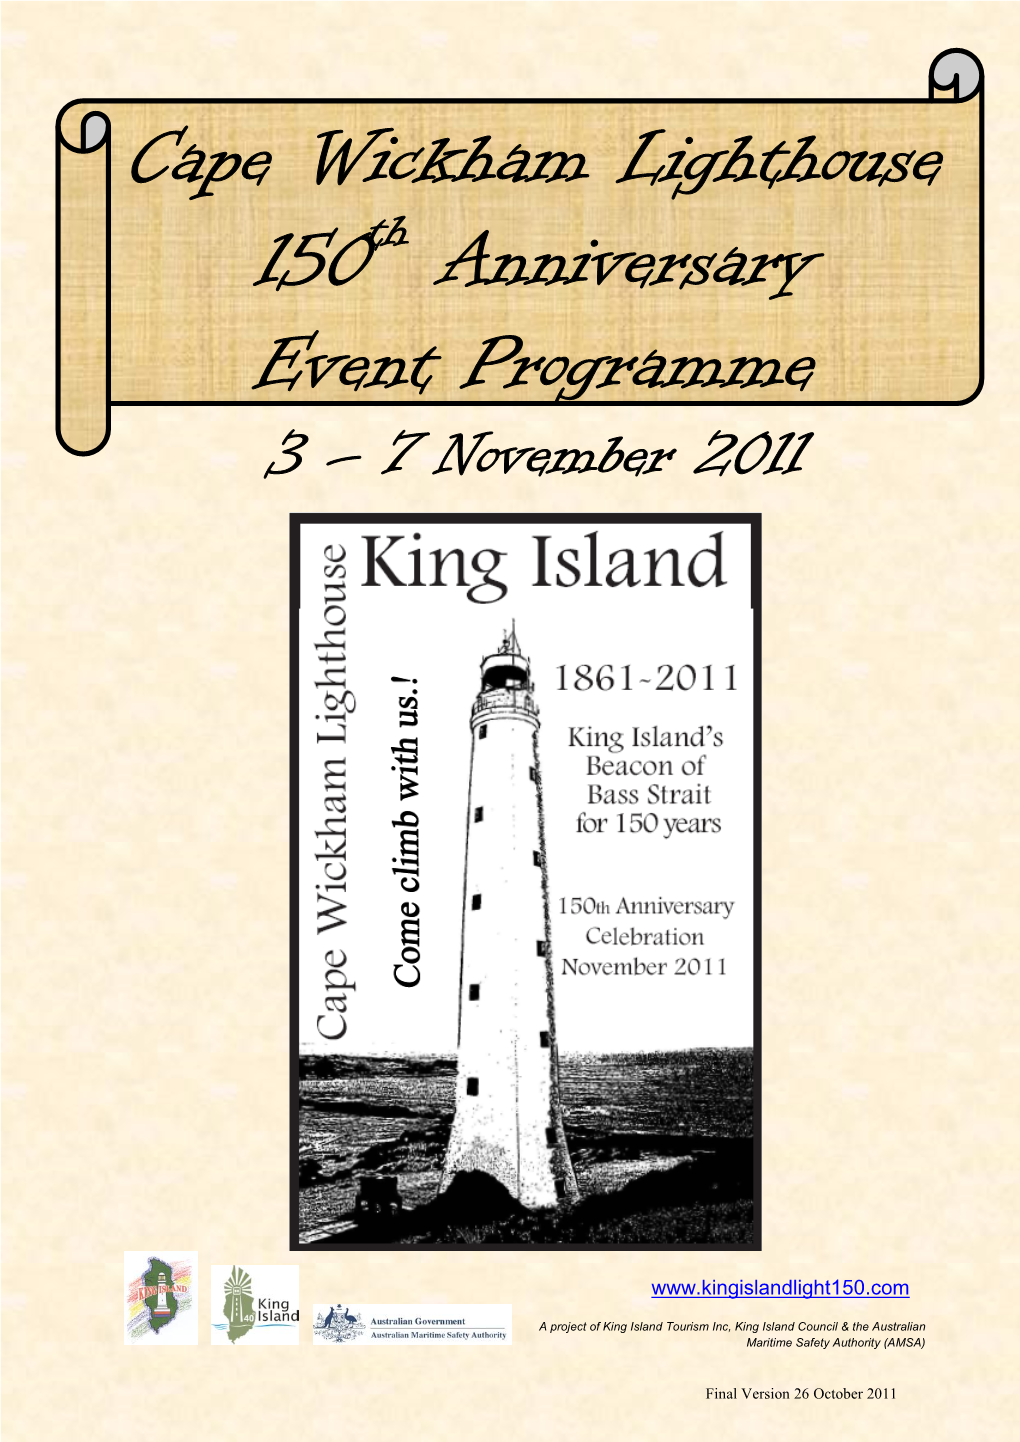 Cape Wickham Lighthouse 150 Anniversary Event Programme